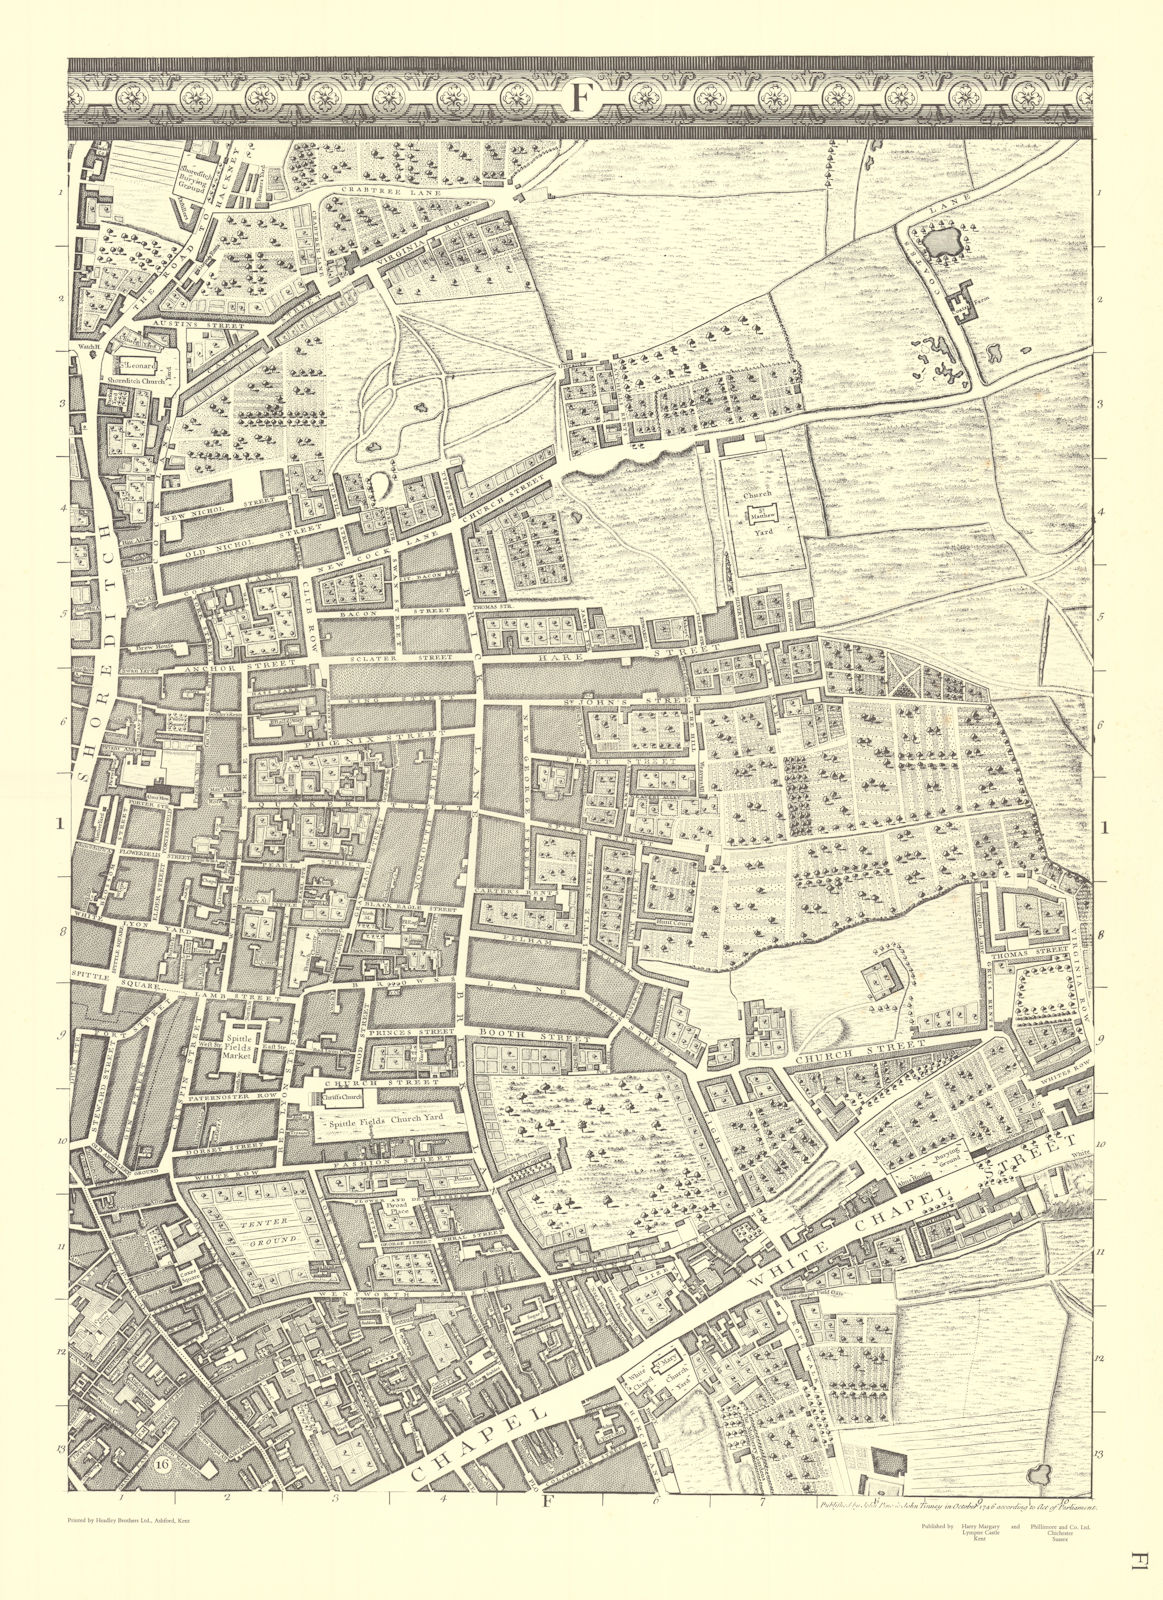 Shoreditch Bethnal Grn Whitechapel Spitalfields F1. After ROCQUE 1971 (1746) map